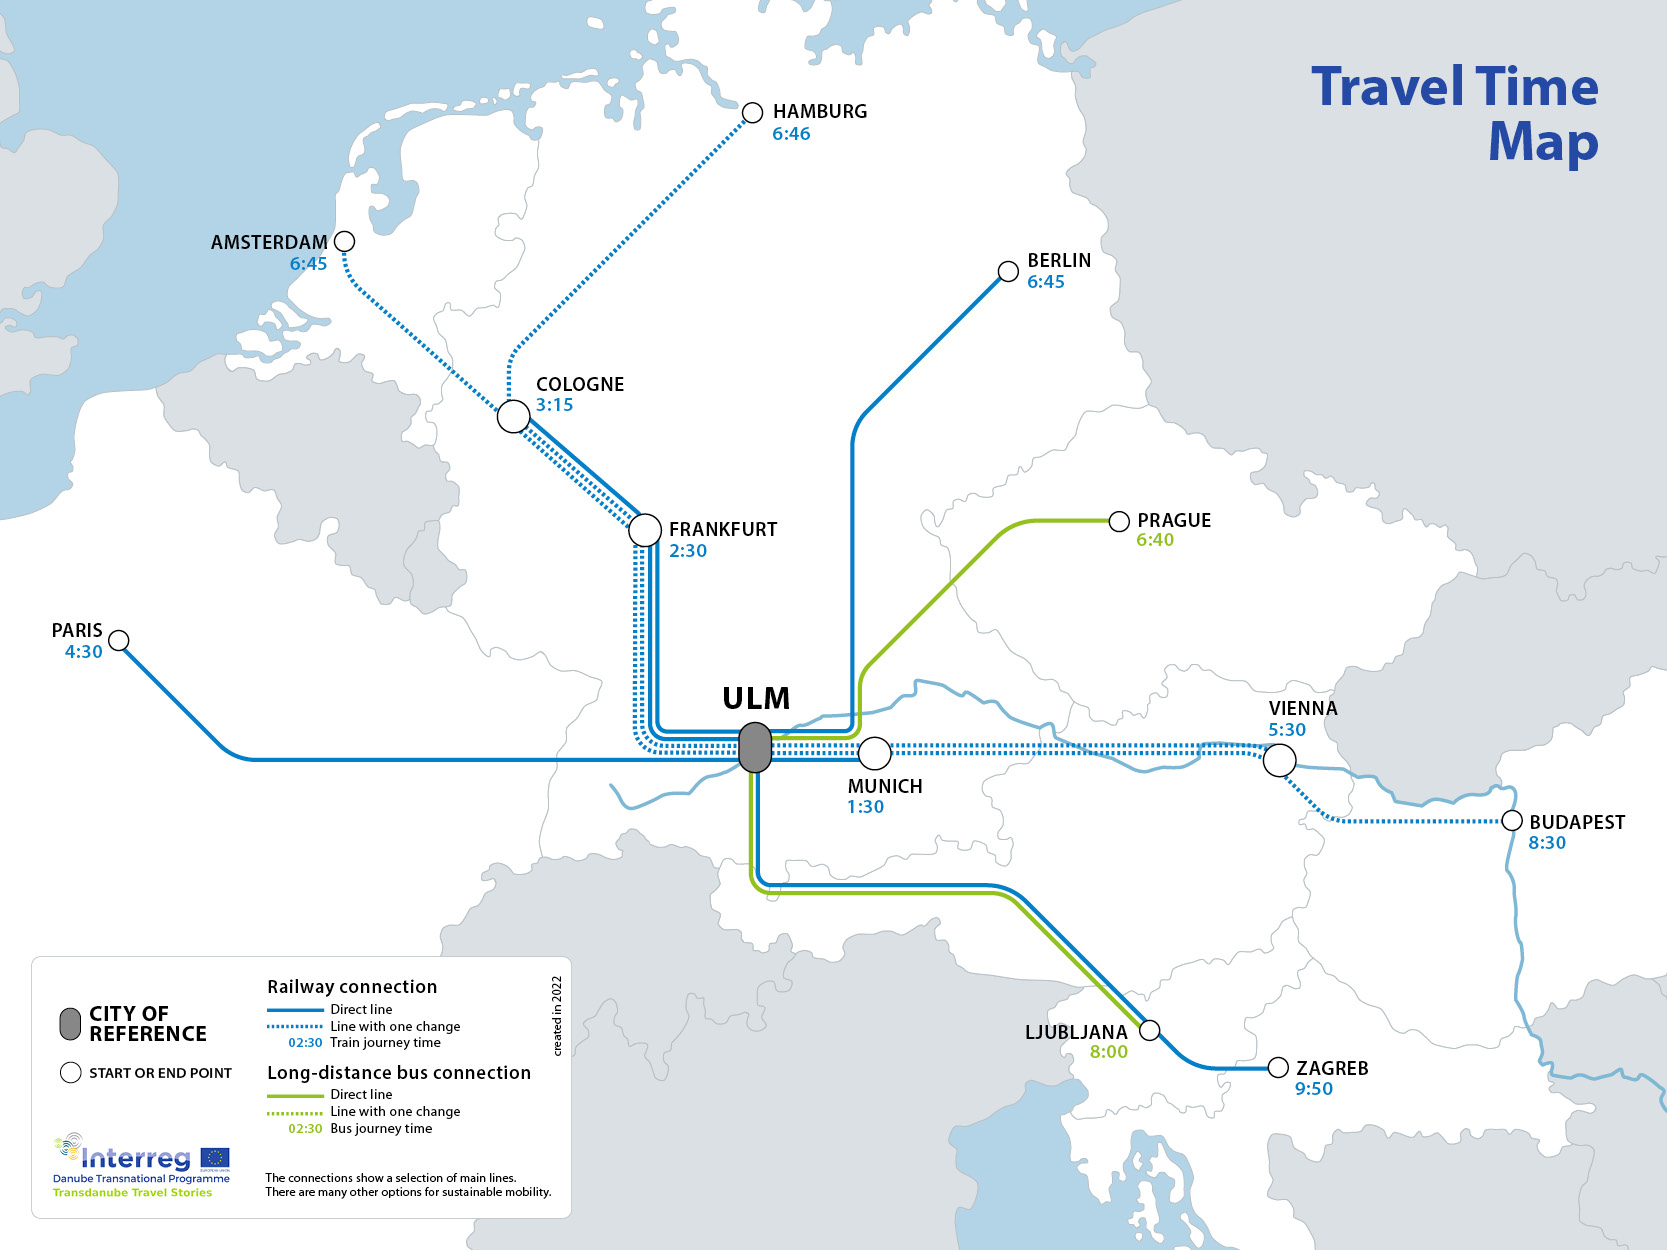 Travel Time Map - Ulm (enlarge image)